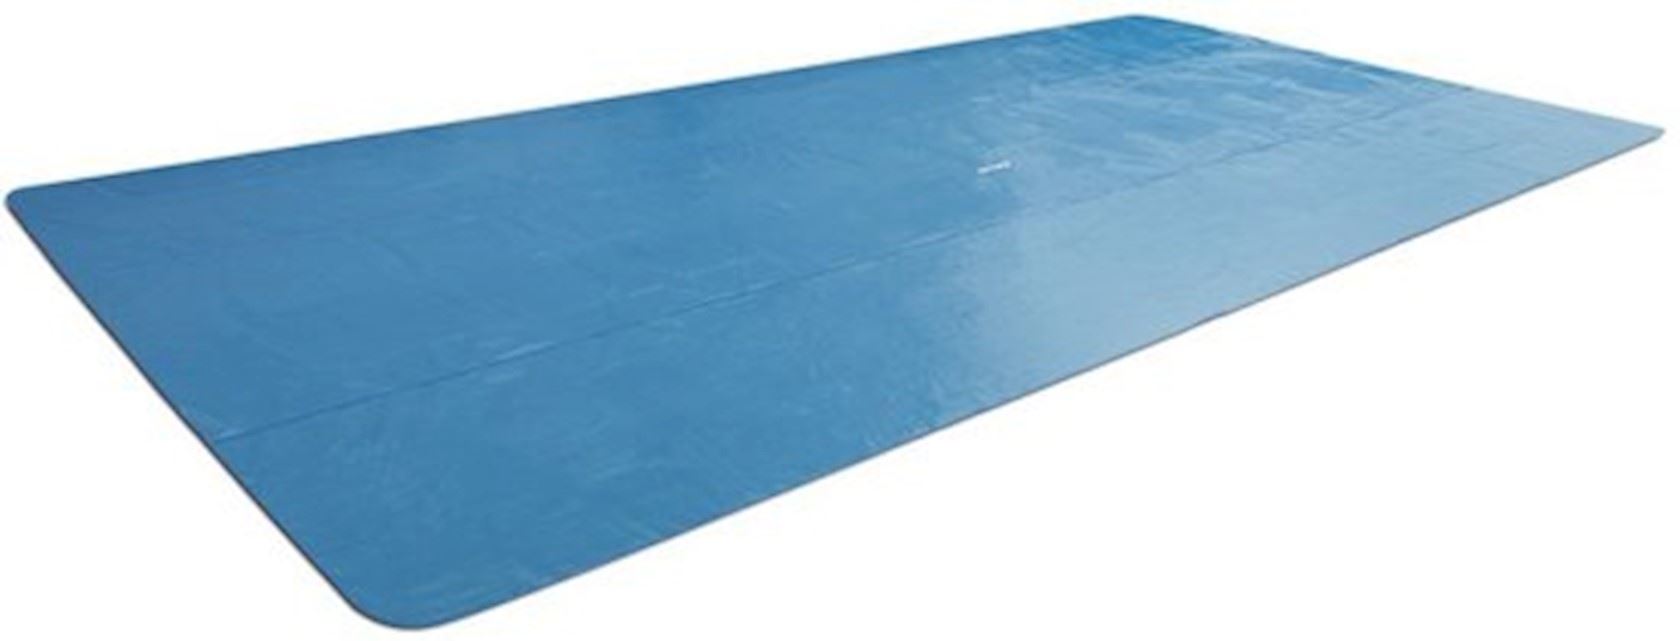 Intex floating solar cover/cover - rectangular - L378 x W186 cm